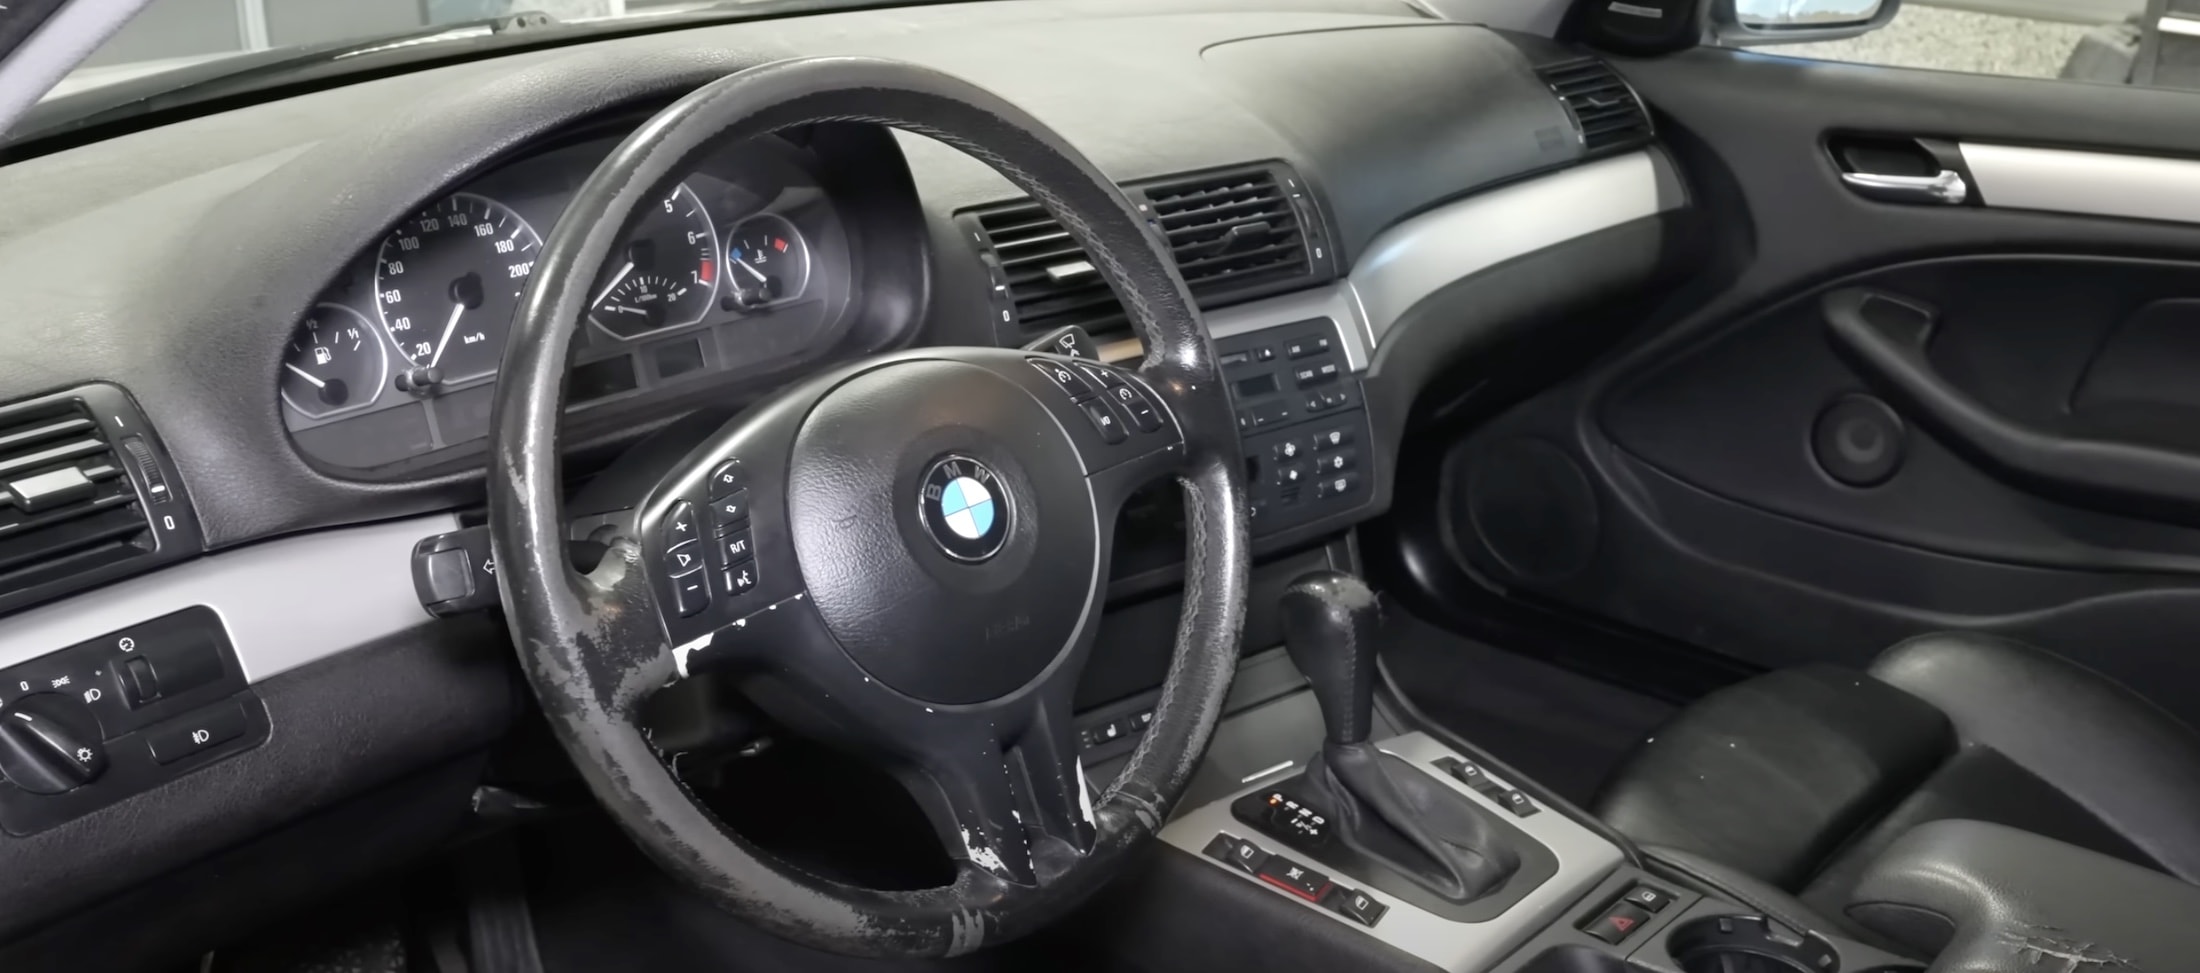 The Rebirth of a BMW 325i